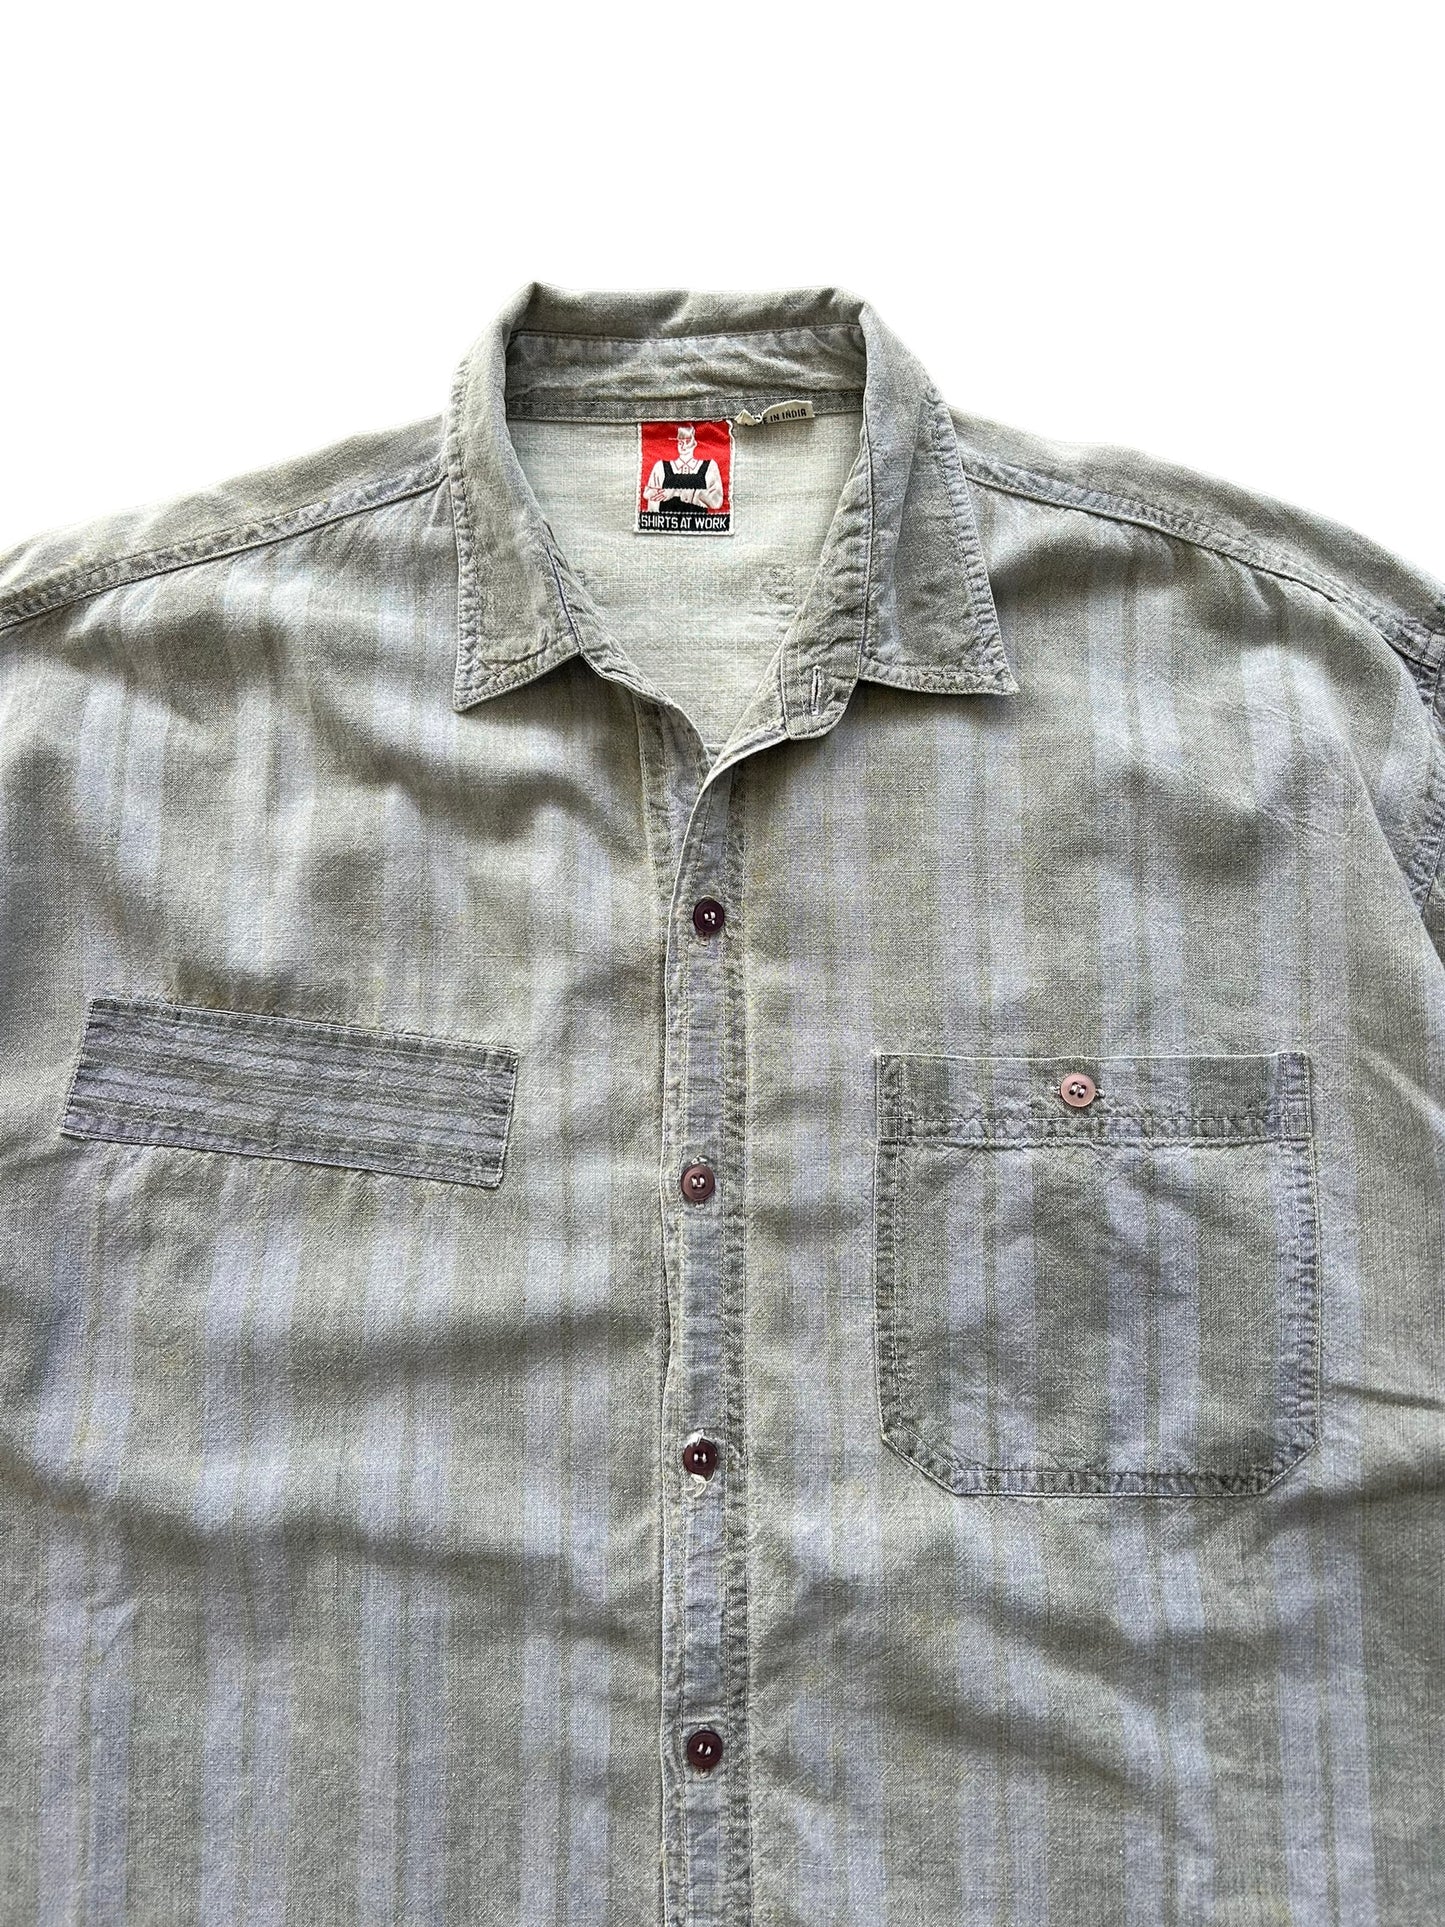 Vintage Button Down Shirt